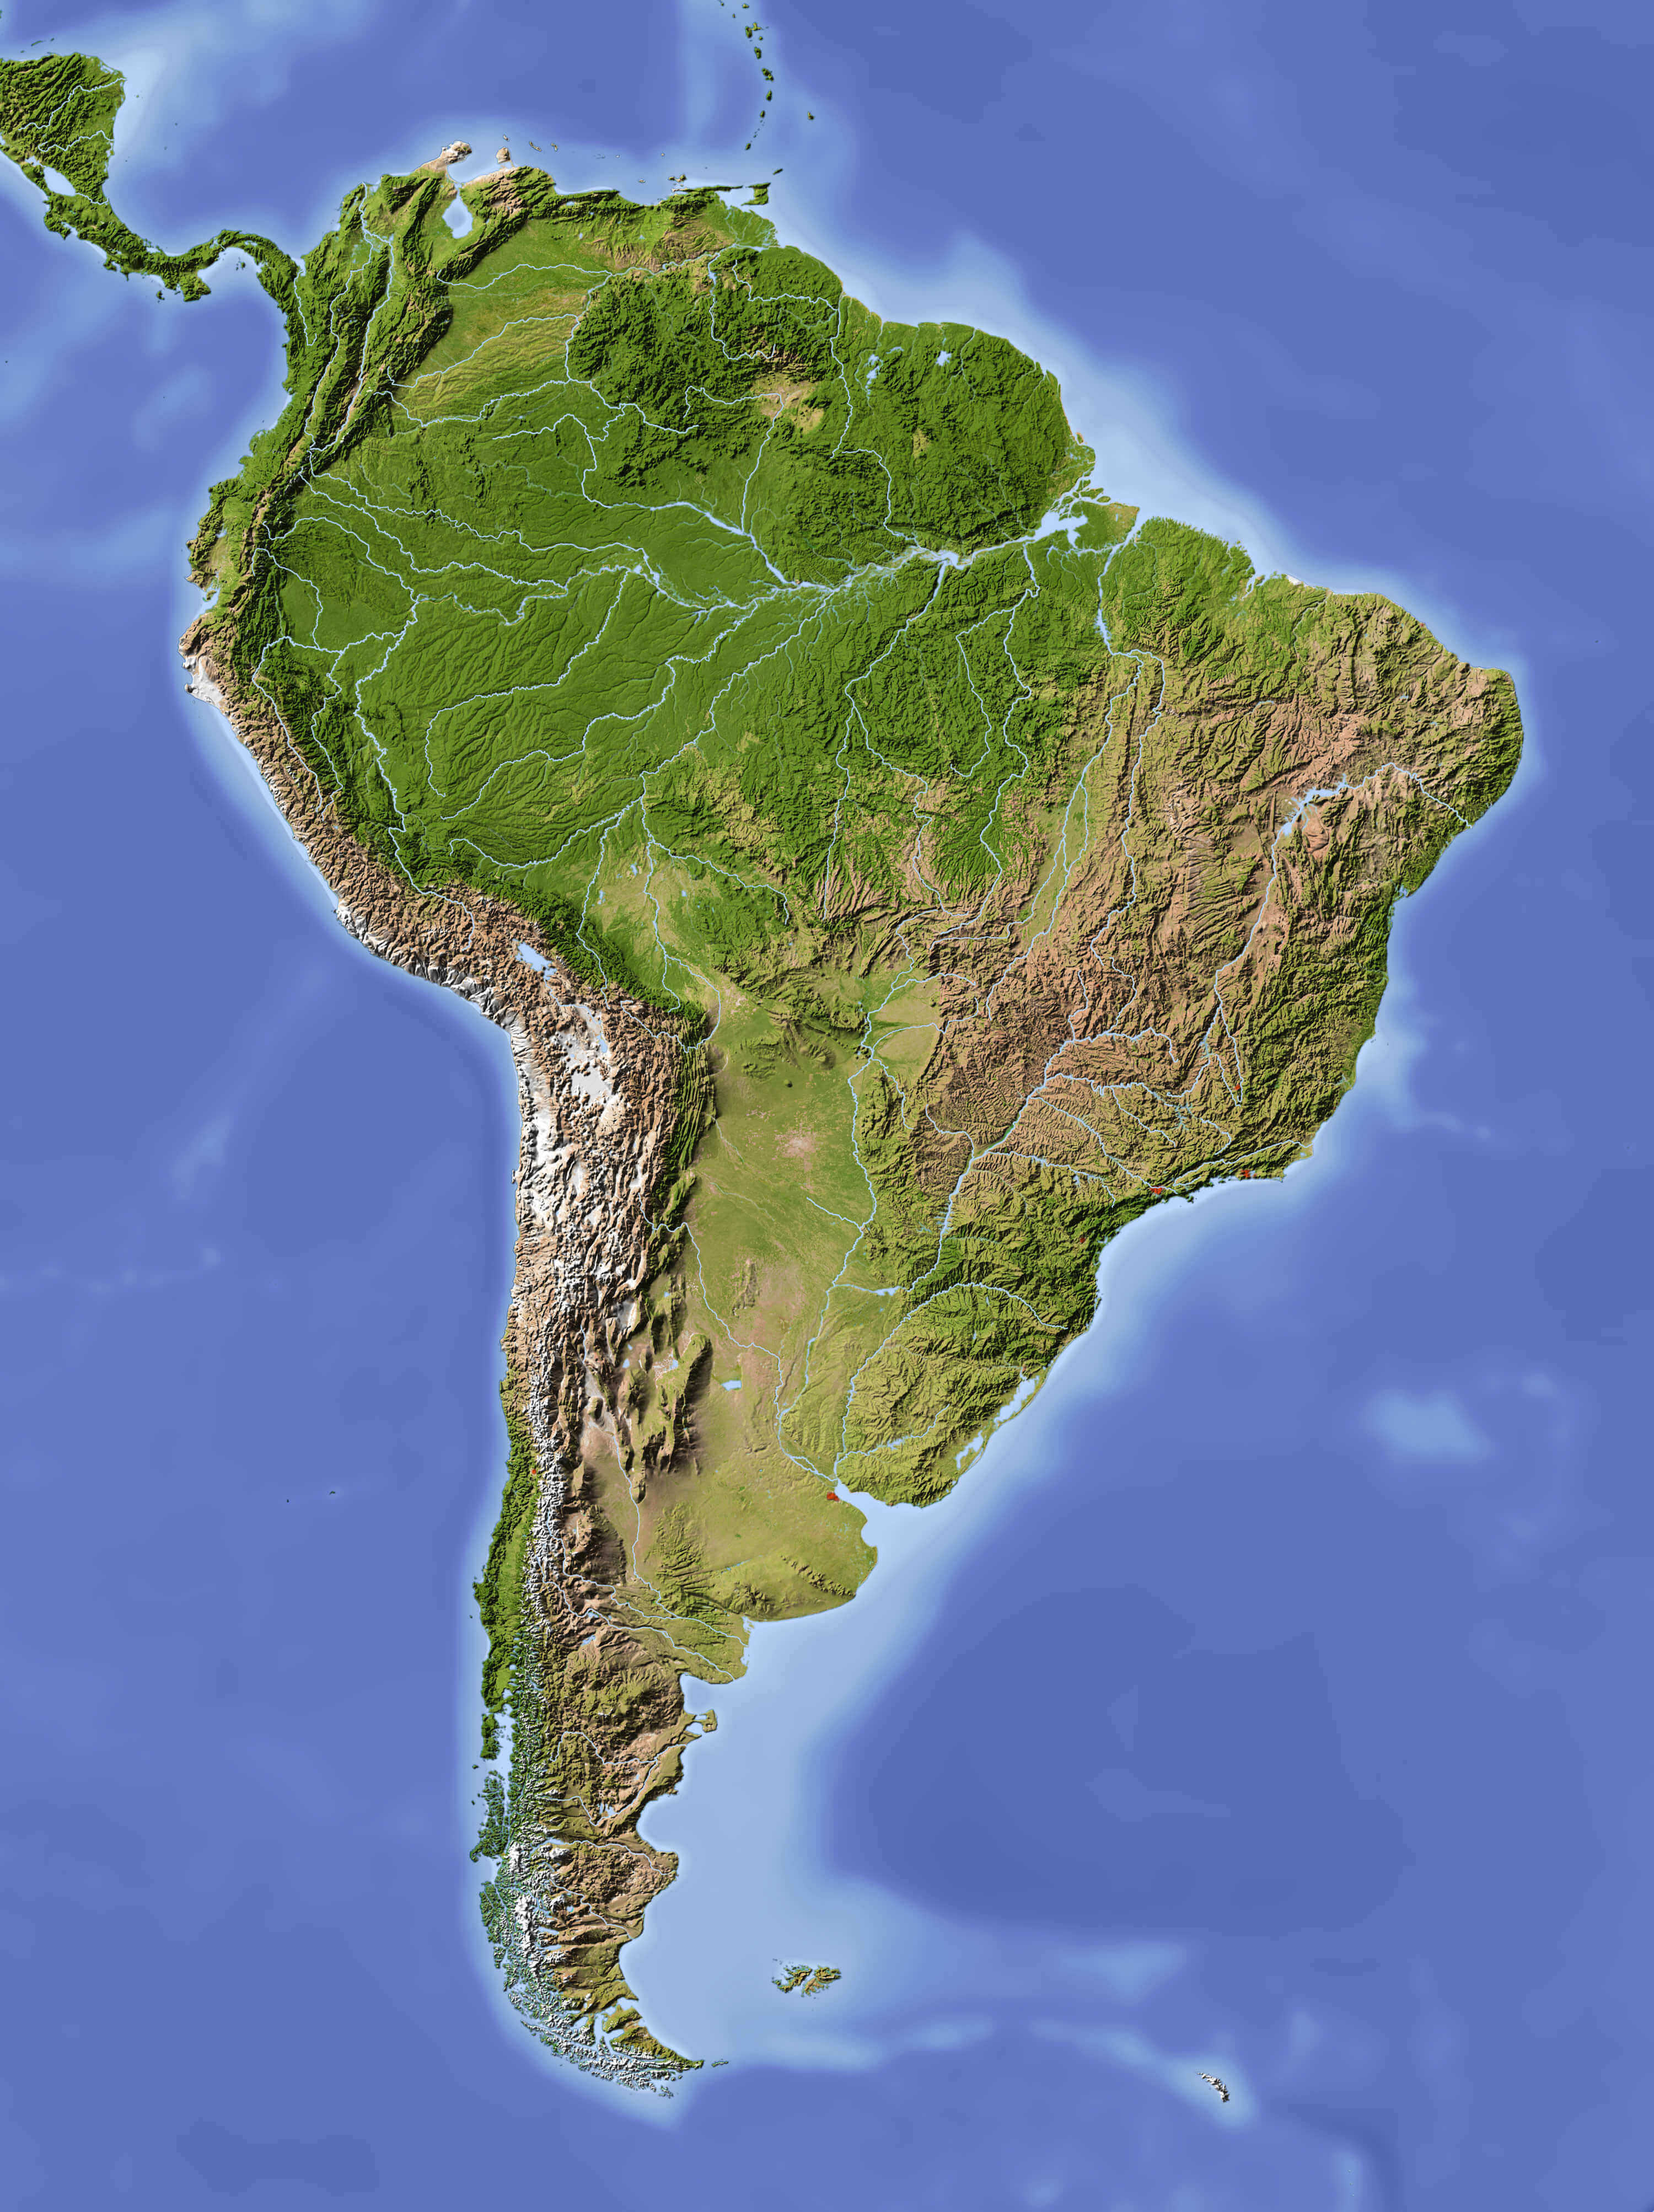 South America Satellite Map